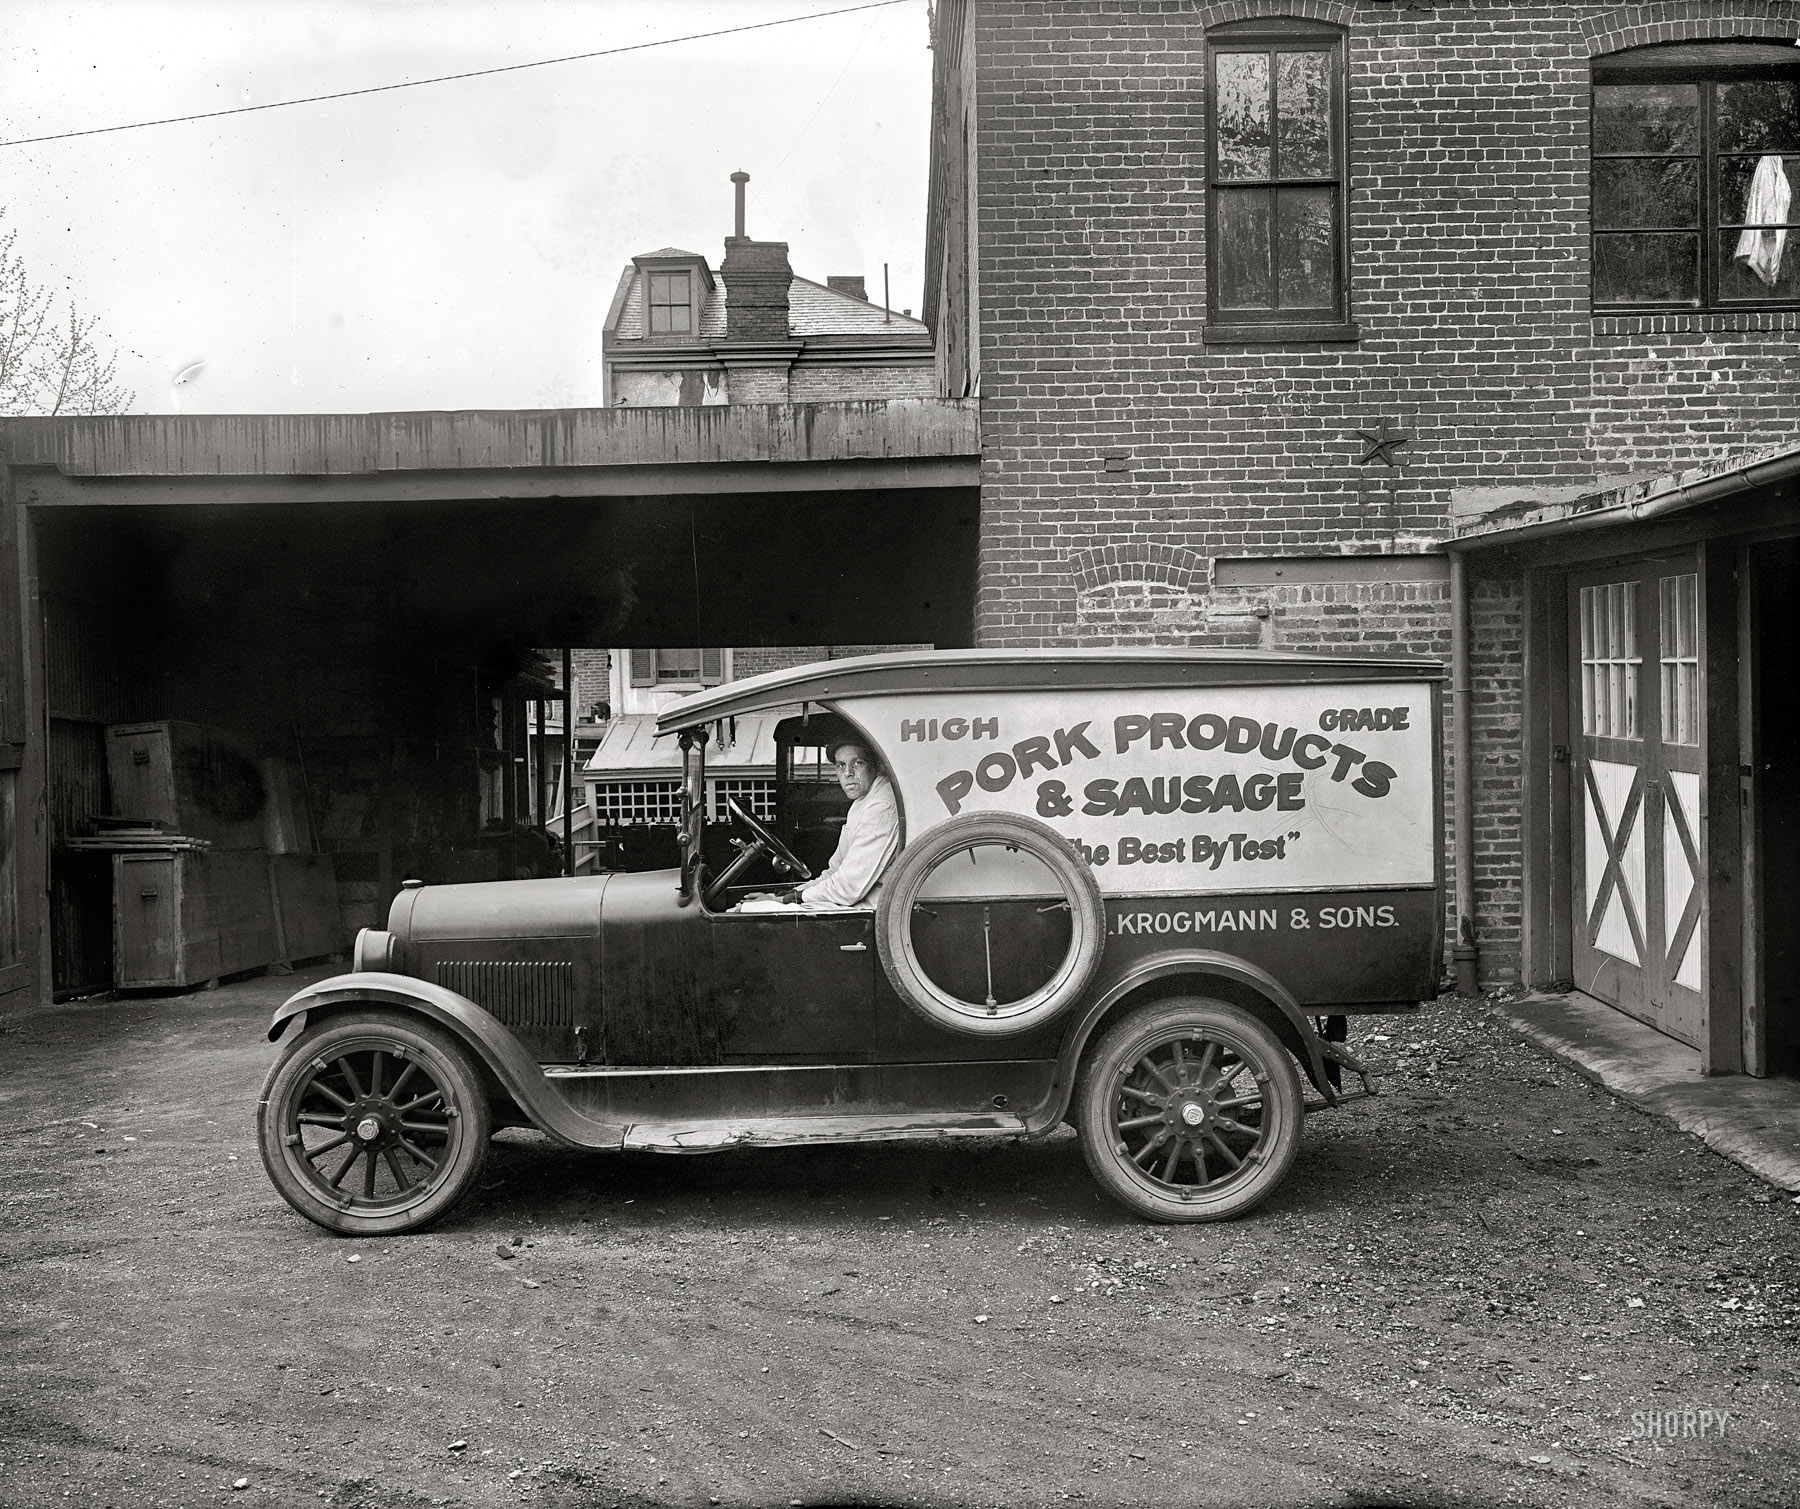 Washington, D.C. "Semmes Motor Co. -- Krogmann & Sons truck, 1926." National Photo Company Collection glass negative. View full size.